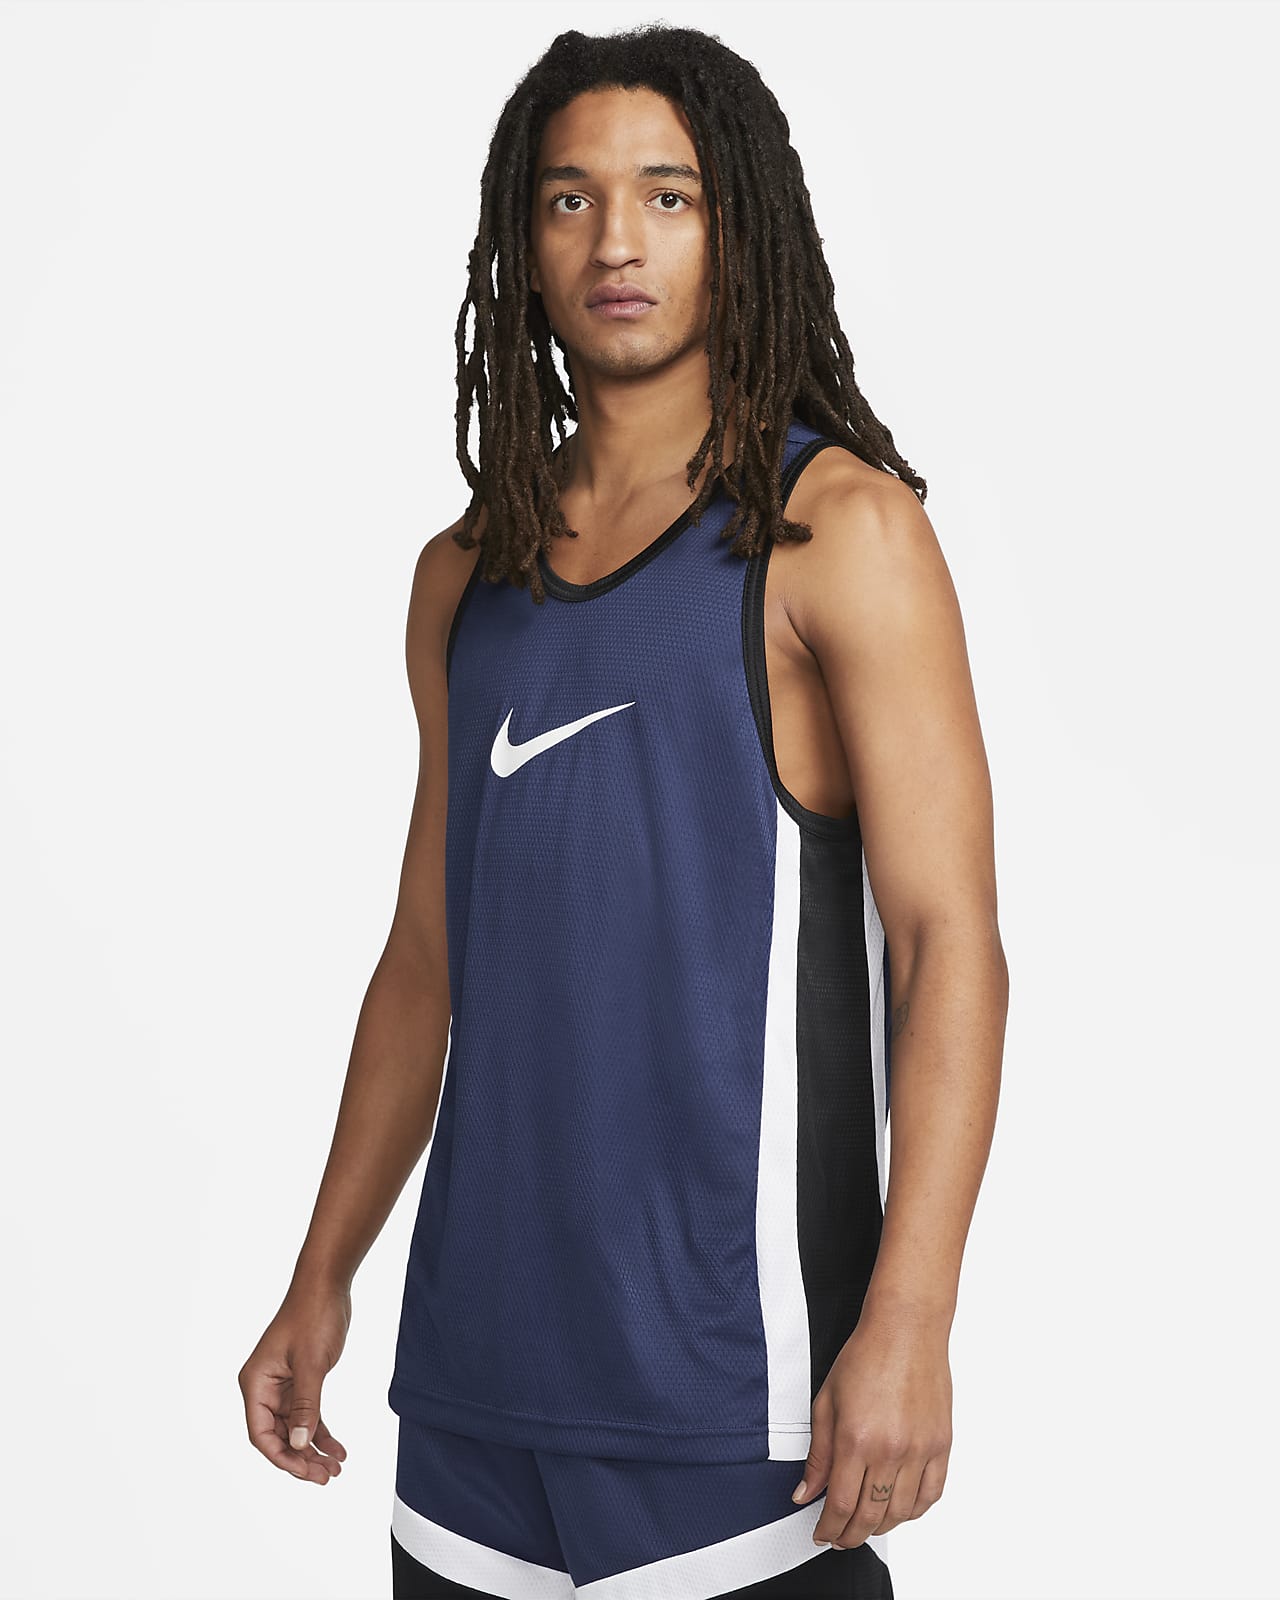 Nike Icon Dri-FIT Basketballtrikot für Herren